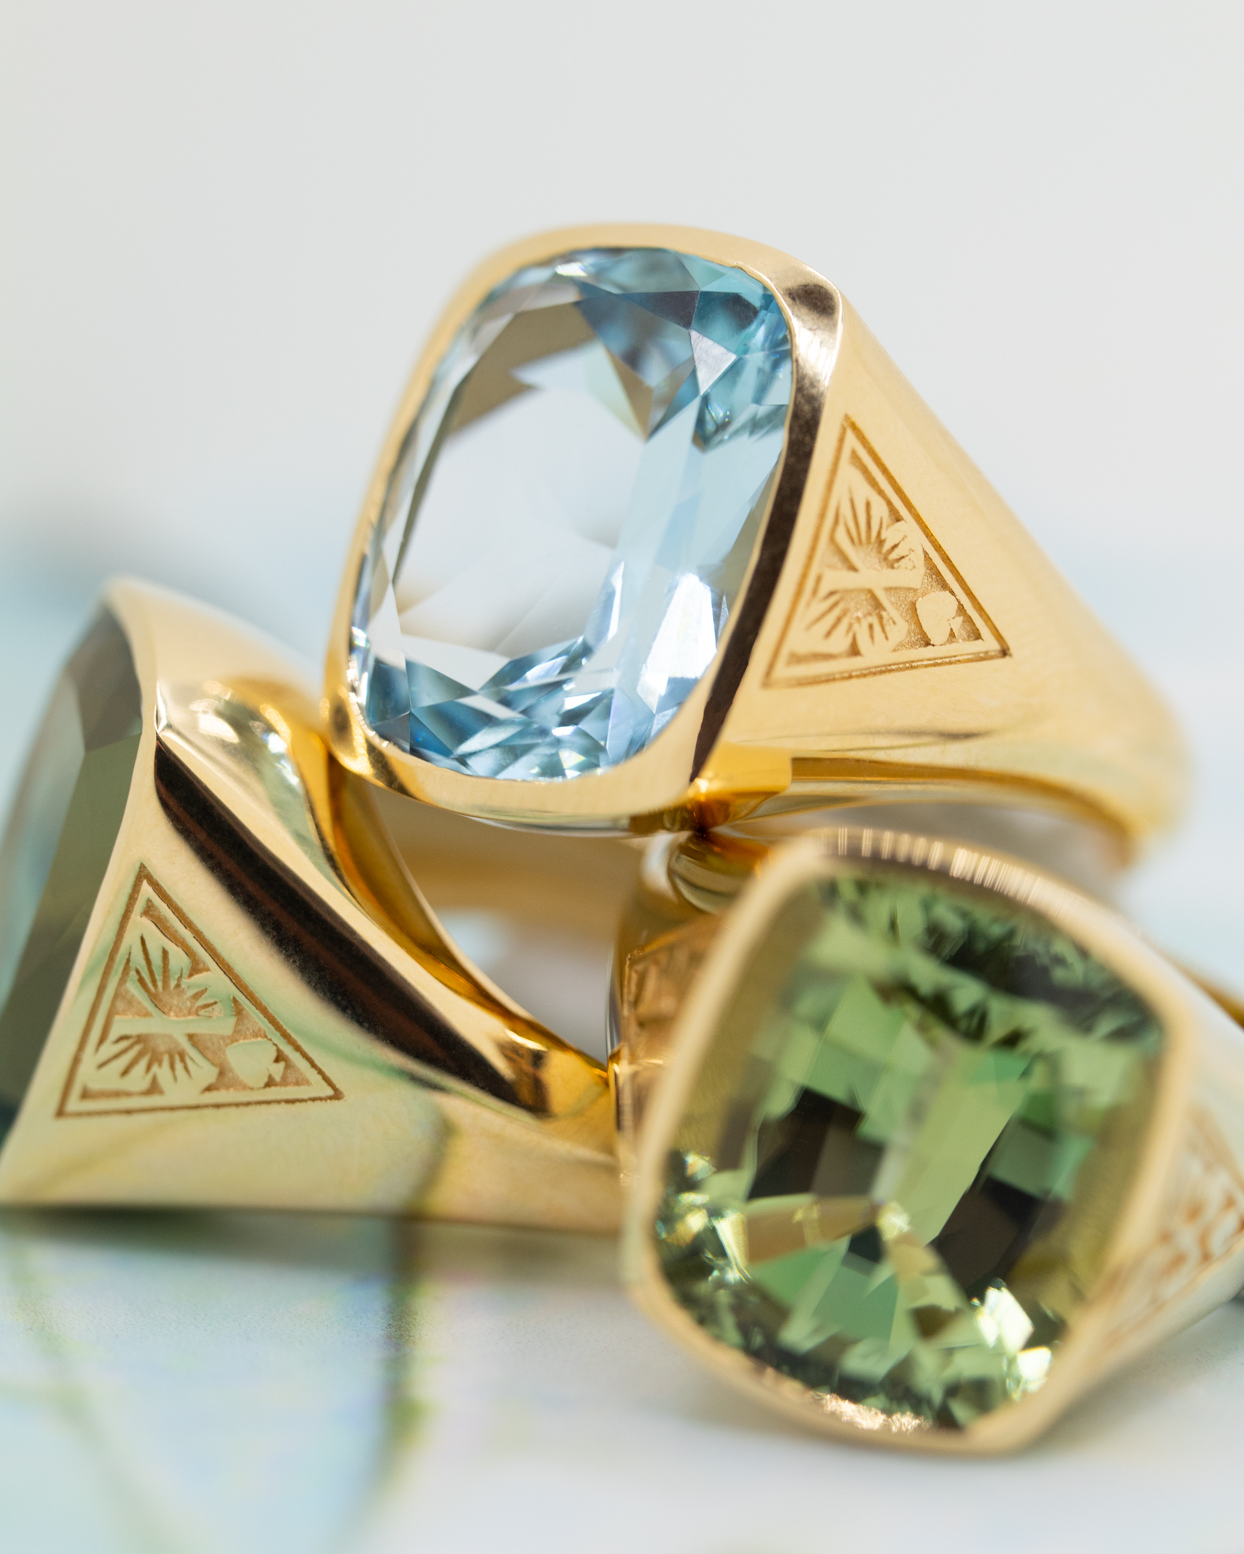 9.9ct Aquamarine - Reverie : One of A Kind Gemstone Ring